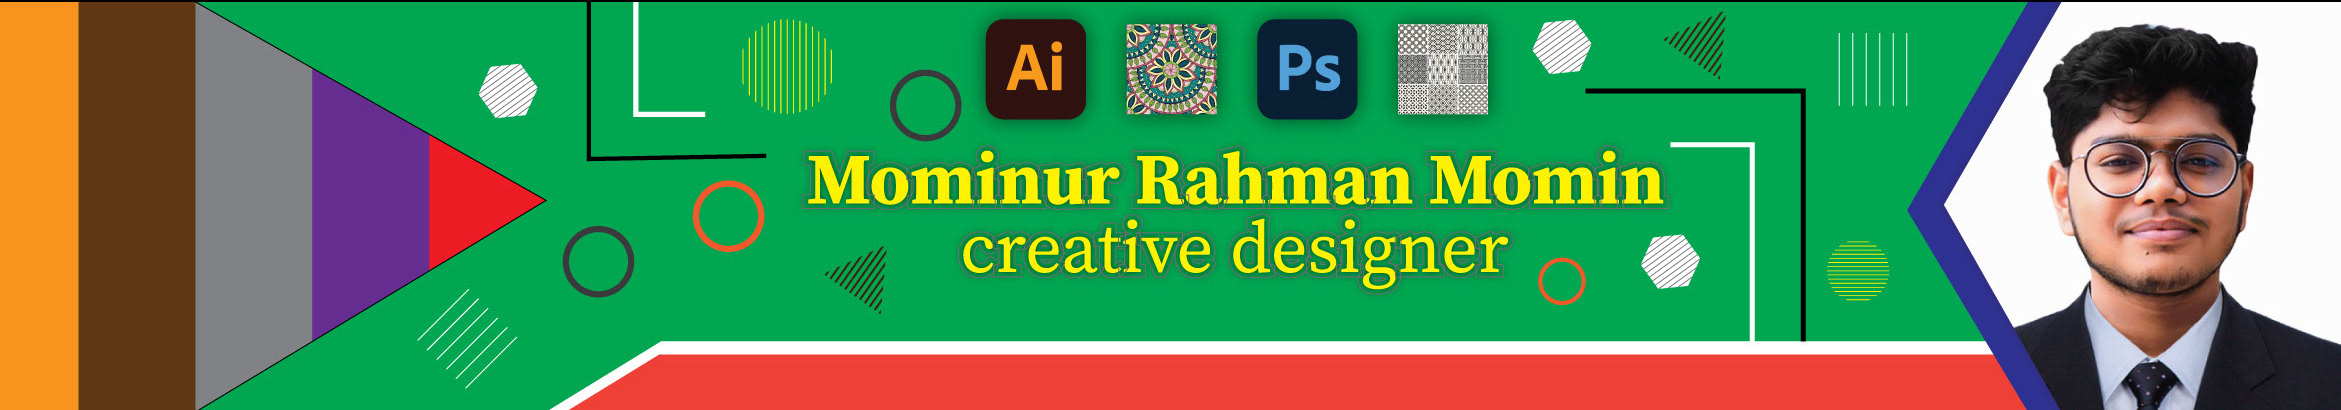 Mominur Rahman Momin's profile banner